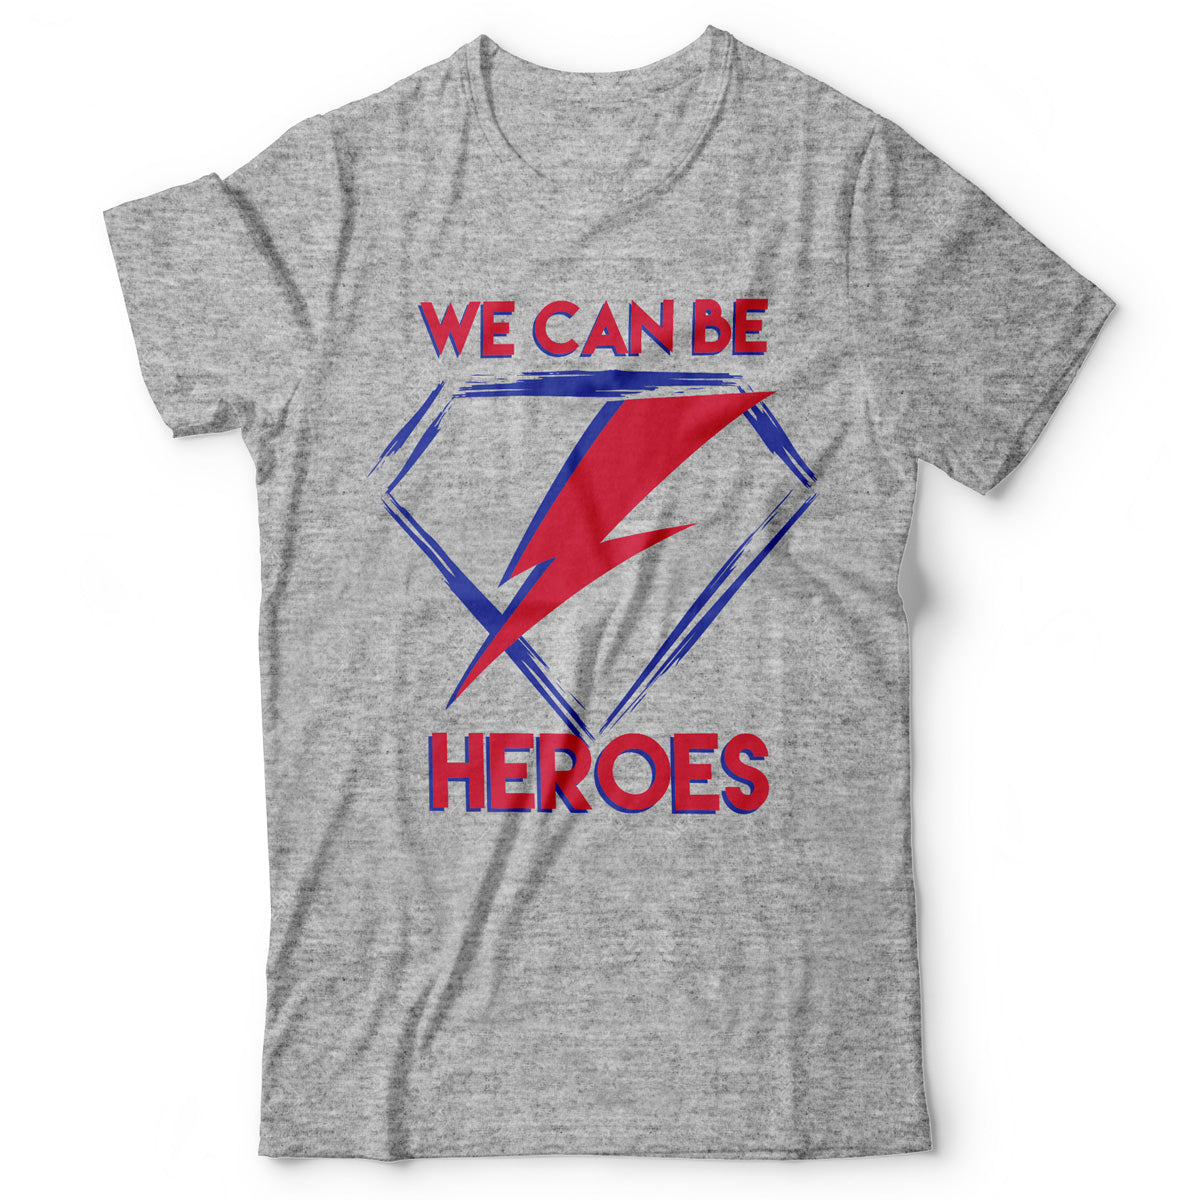 David Bowie - Heroes - Men's T-Shirt Gray